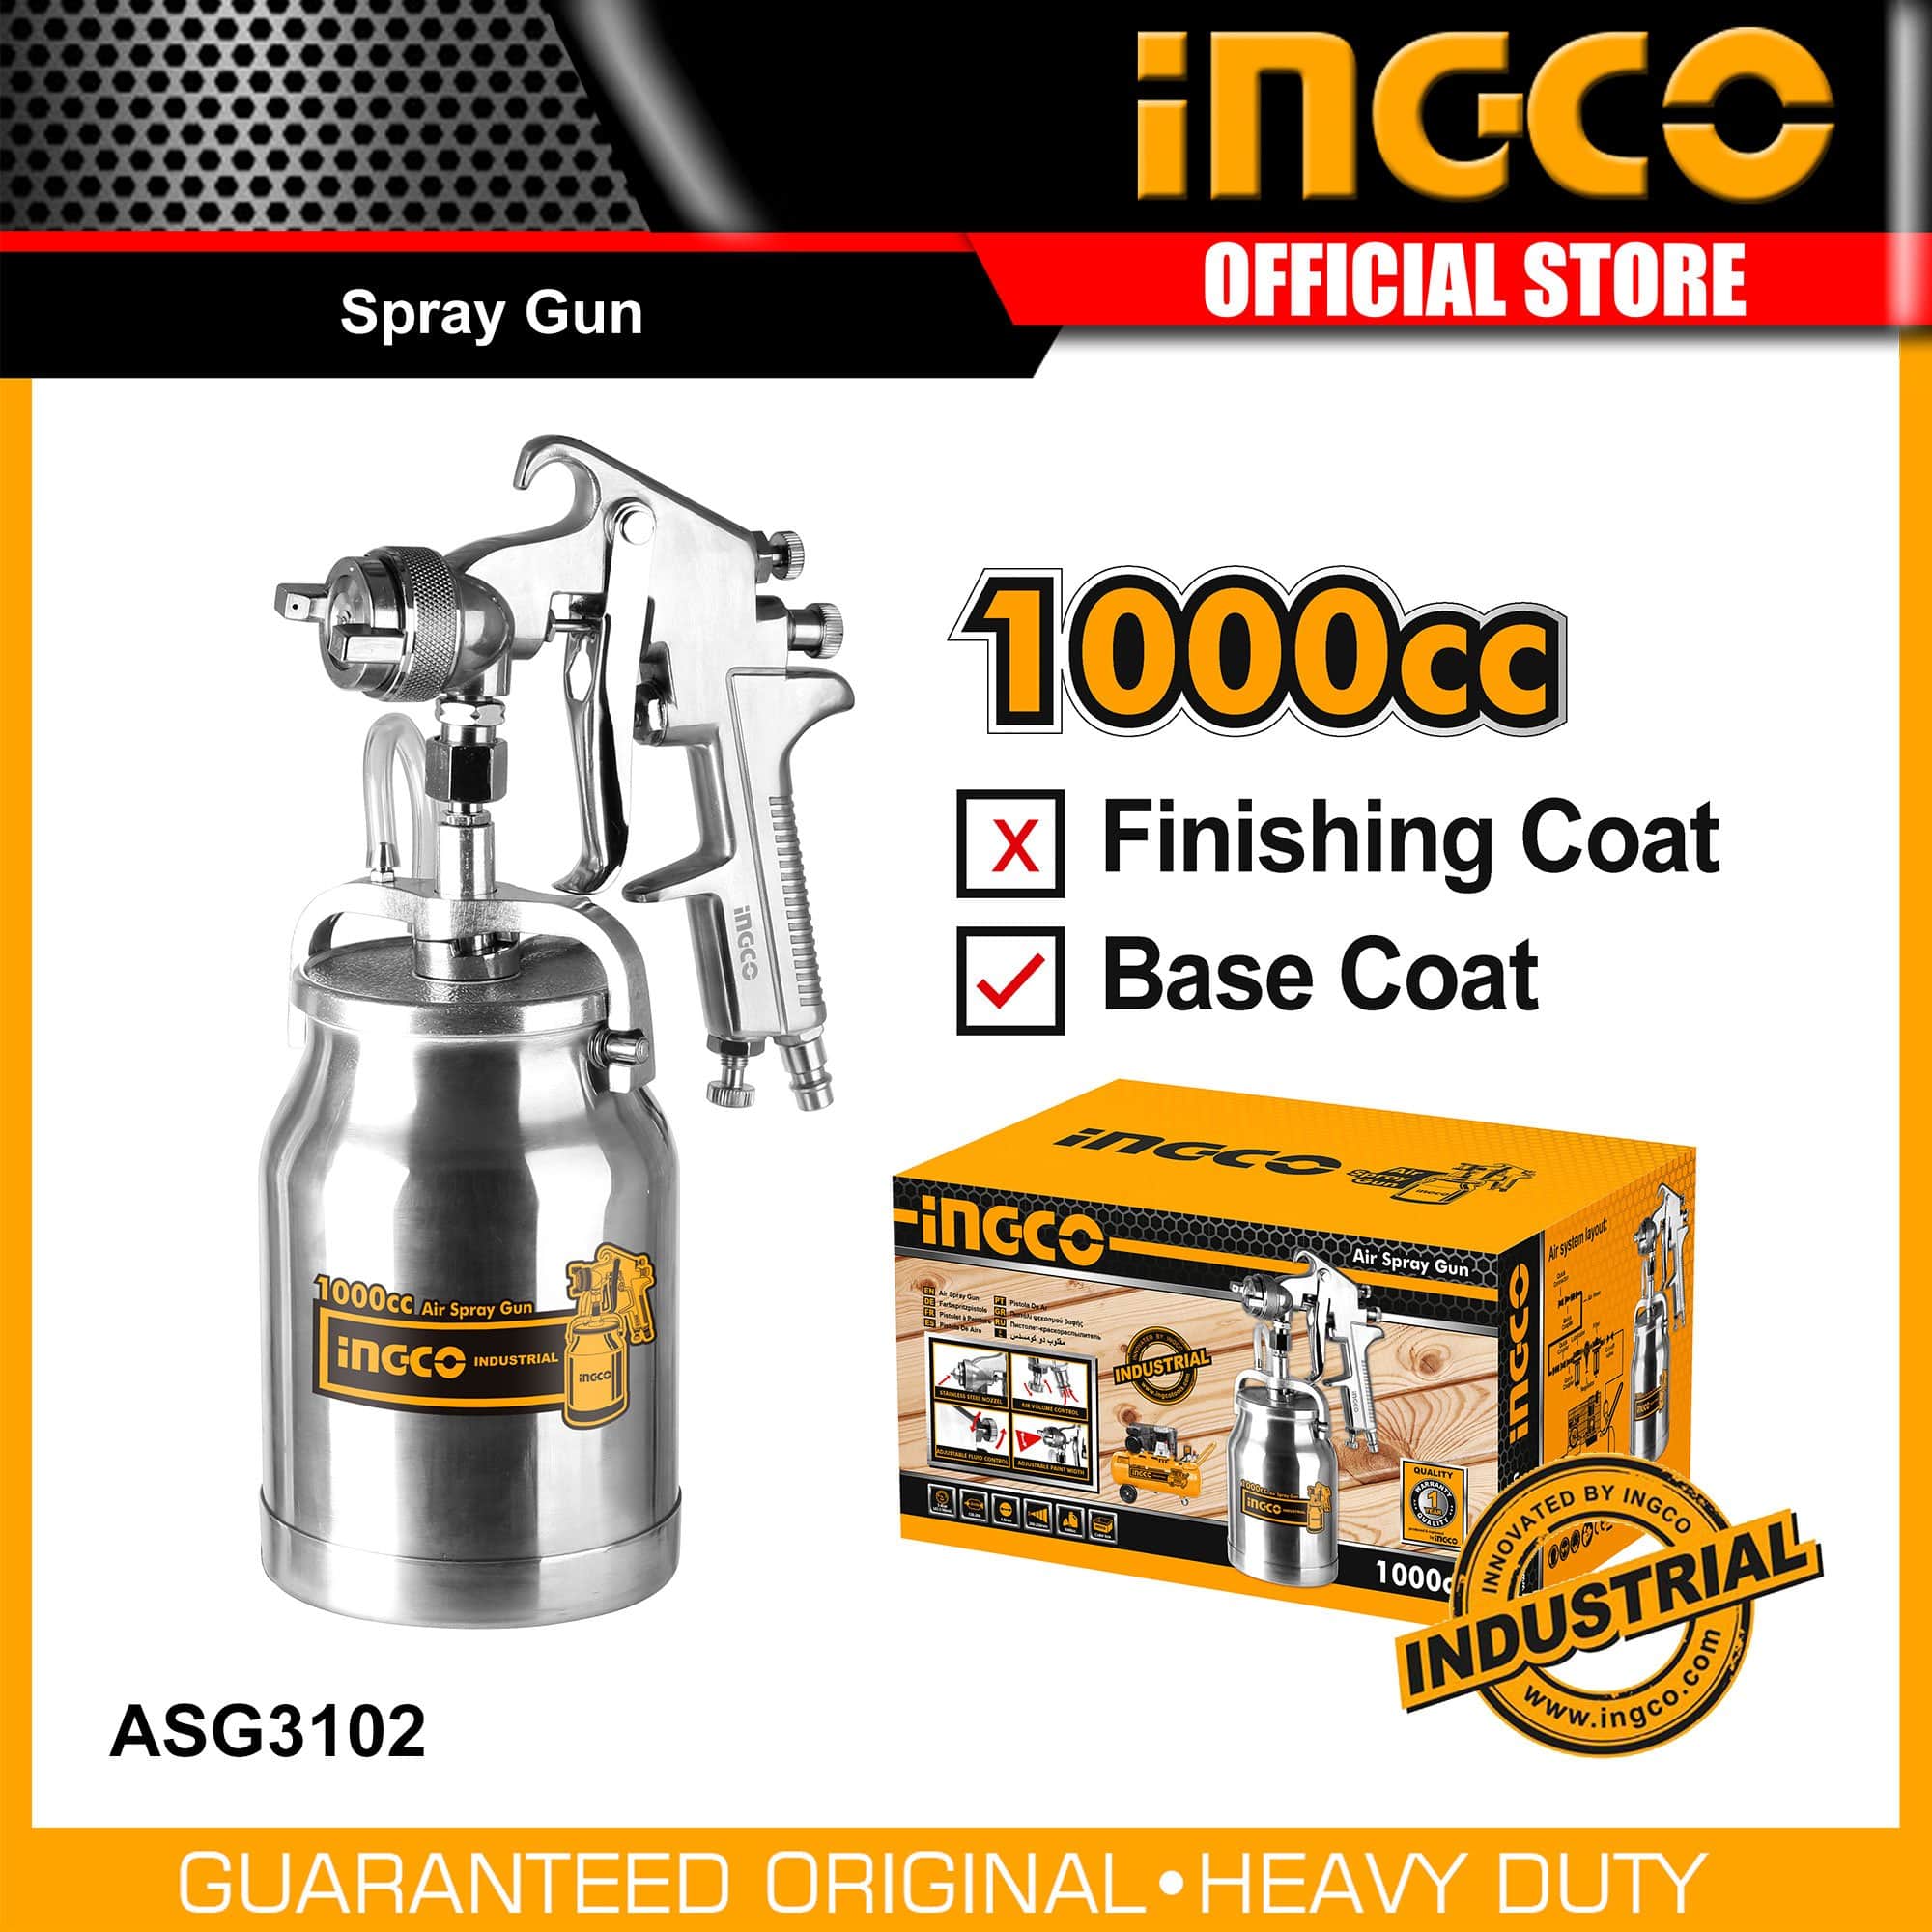 Ingco Spray Gun 1000cc - ASG3102 | Supply Master | Accra, Ghana Tools Building Steel Engineering Hardware tool